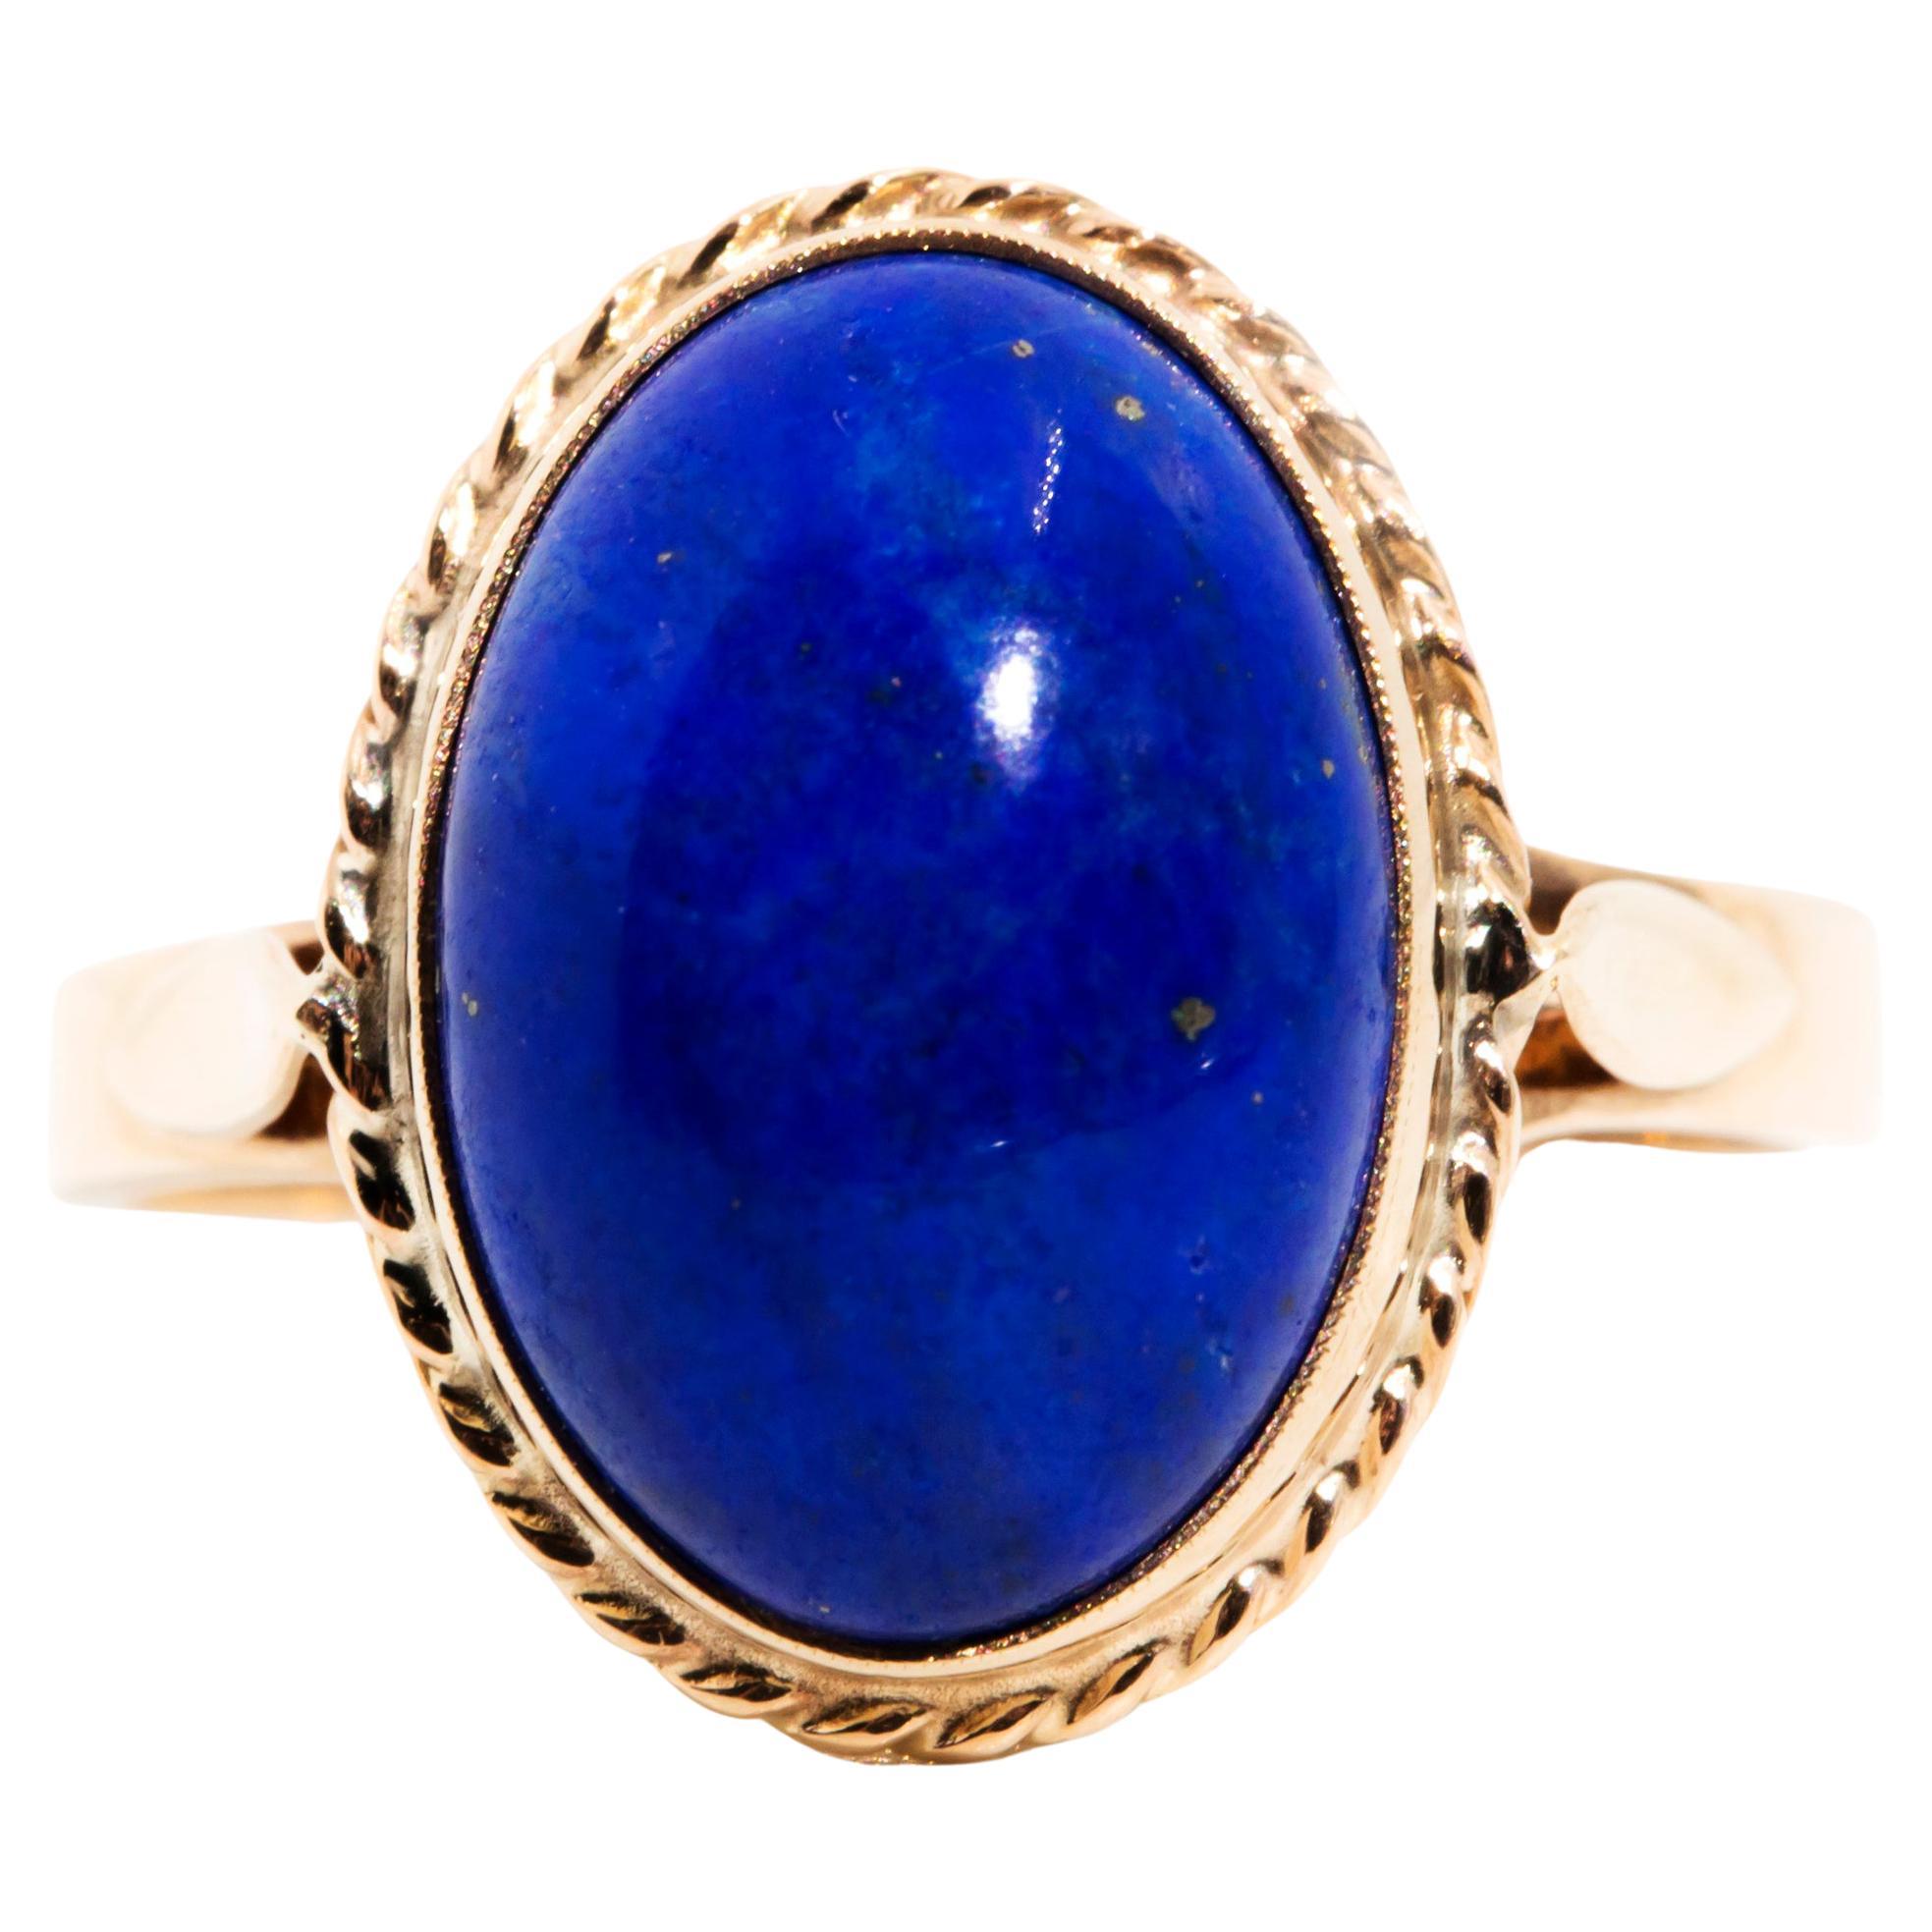 Vintage & Antique Lapis Lazuli Jewelry: Rings, Necklaces & More 